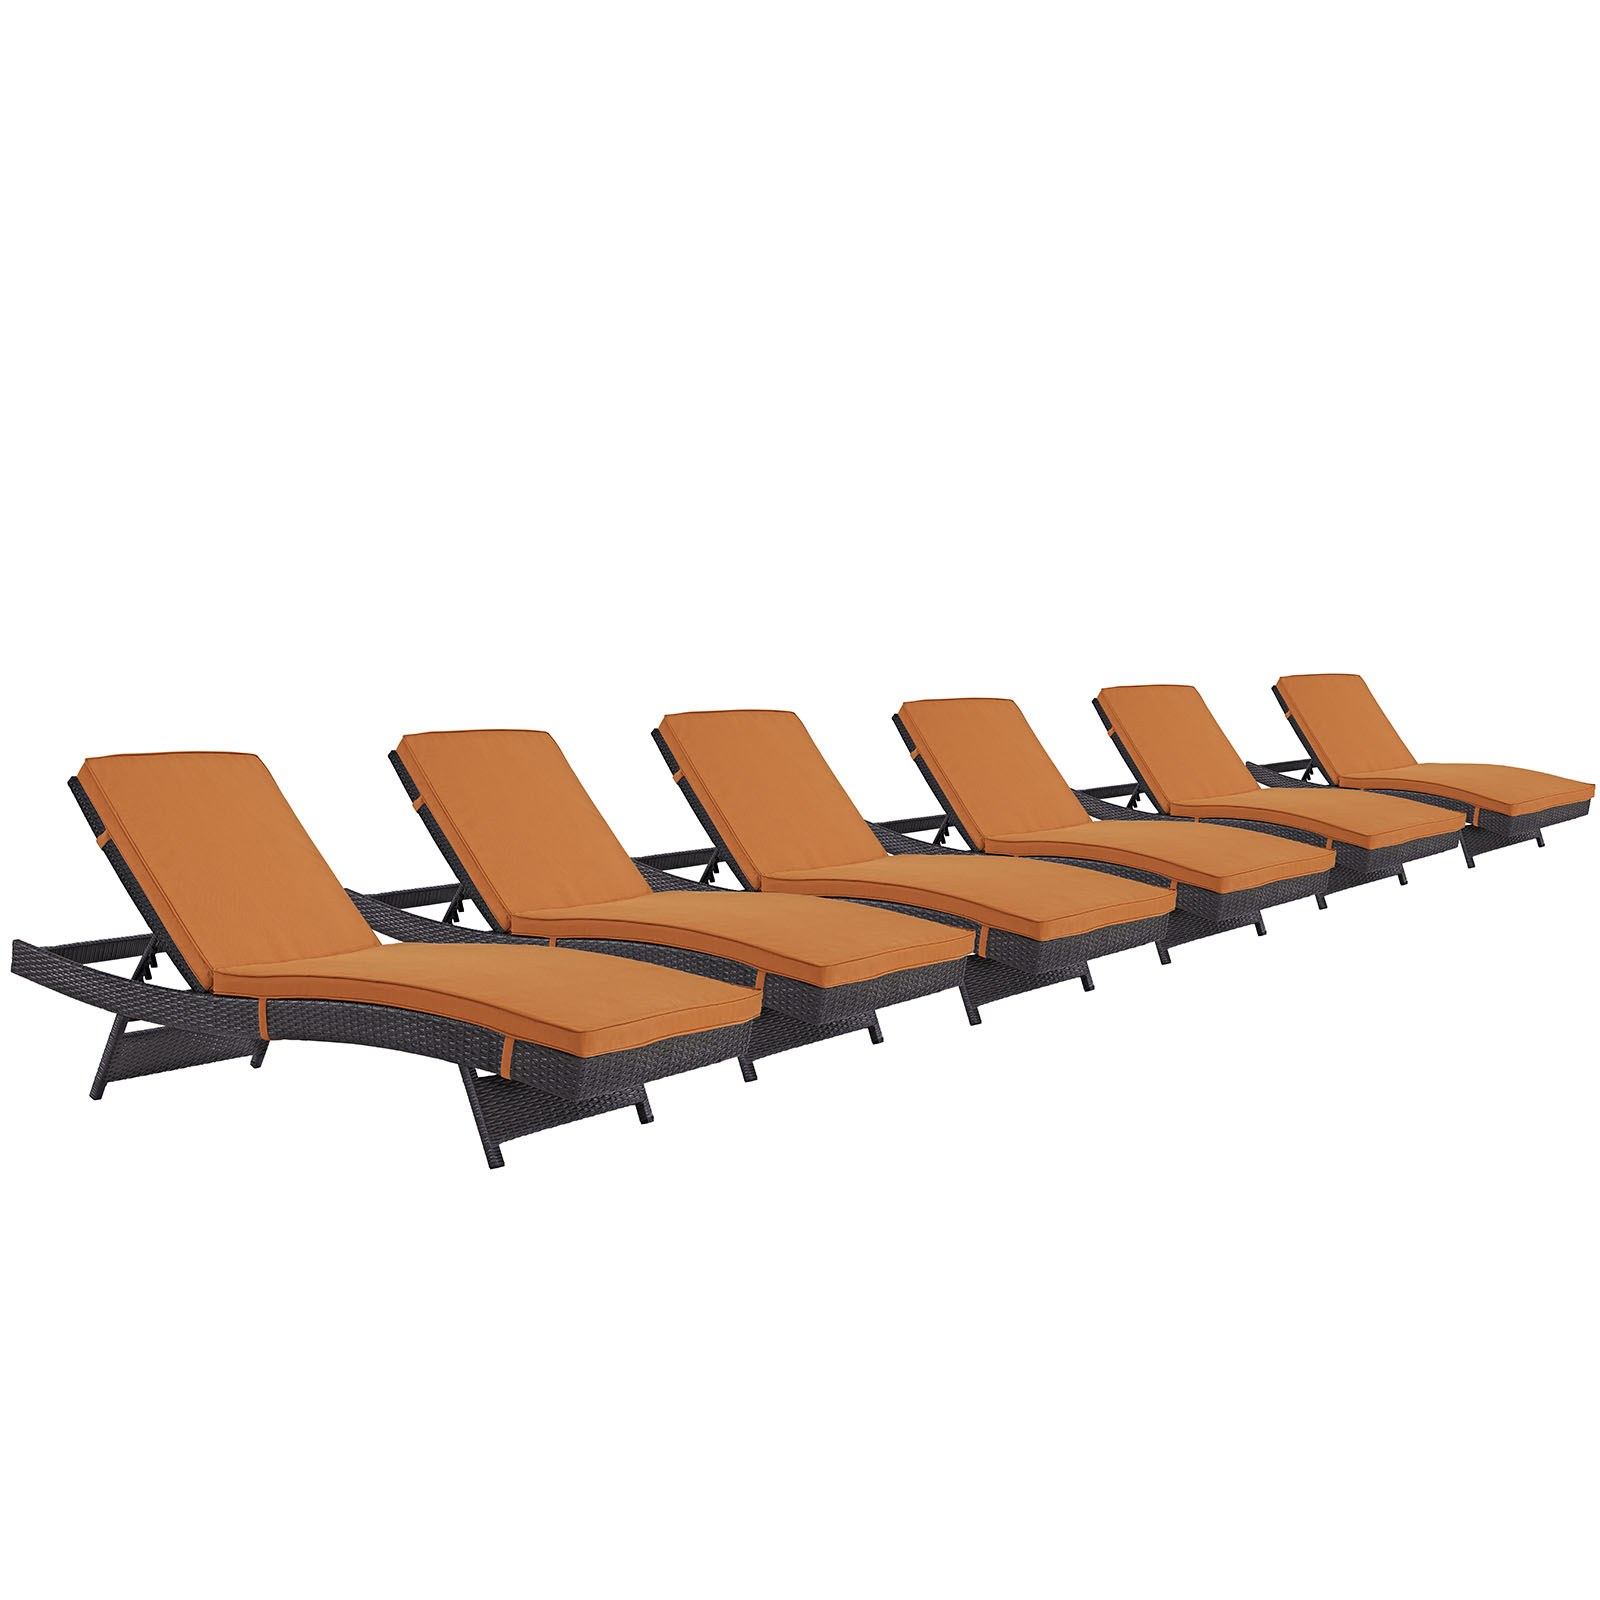 Modway Convene Chaise Outdoor Patio Set of 6 in Espresso Orange - image 2 of 5